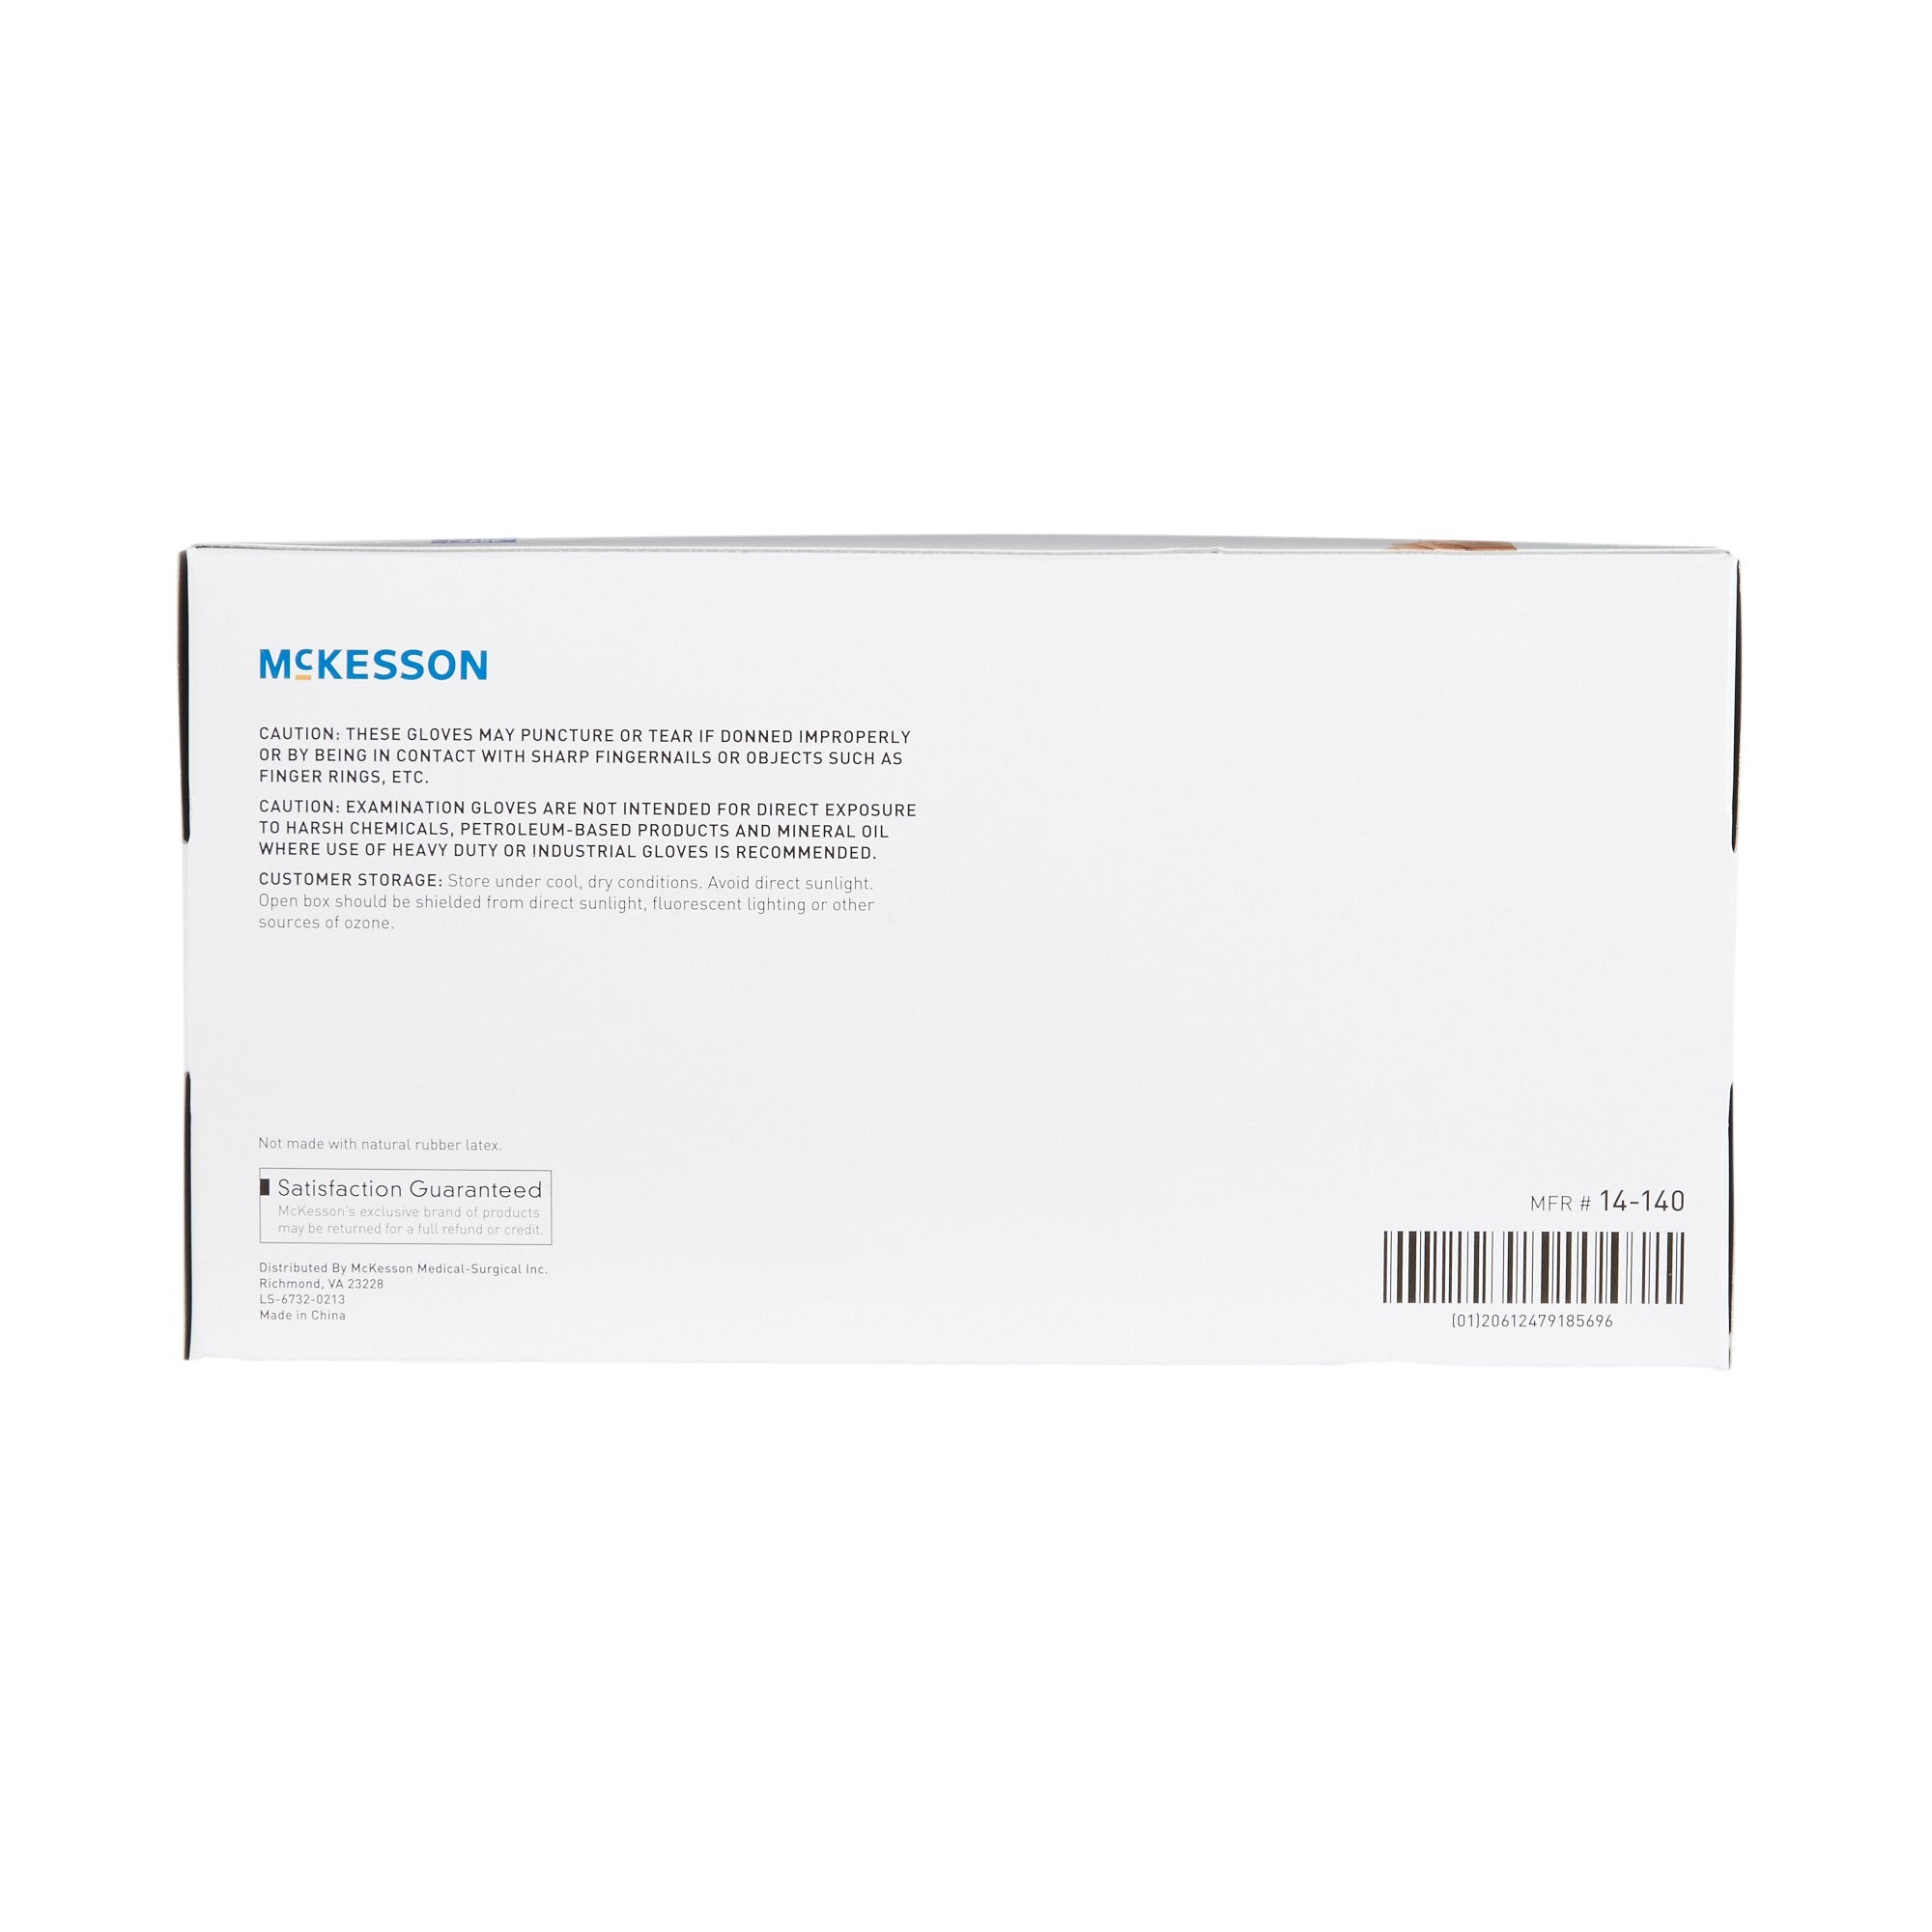 McKesson Vinyl Exam Gloves XL - Clear, Non-Sterile, Powder-Free (130 Pack)